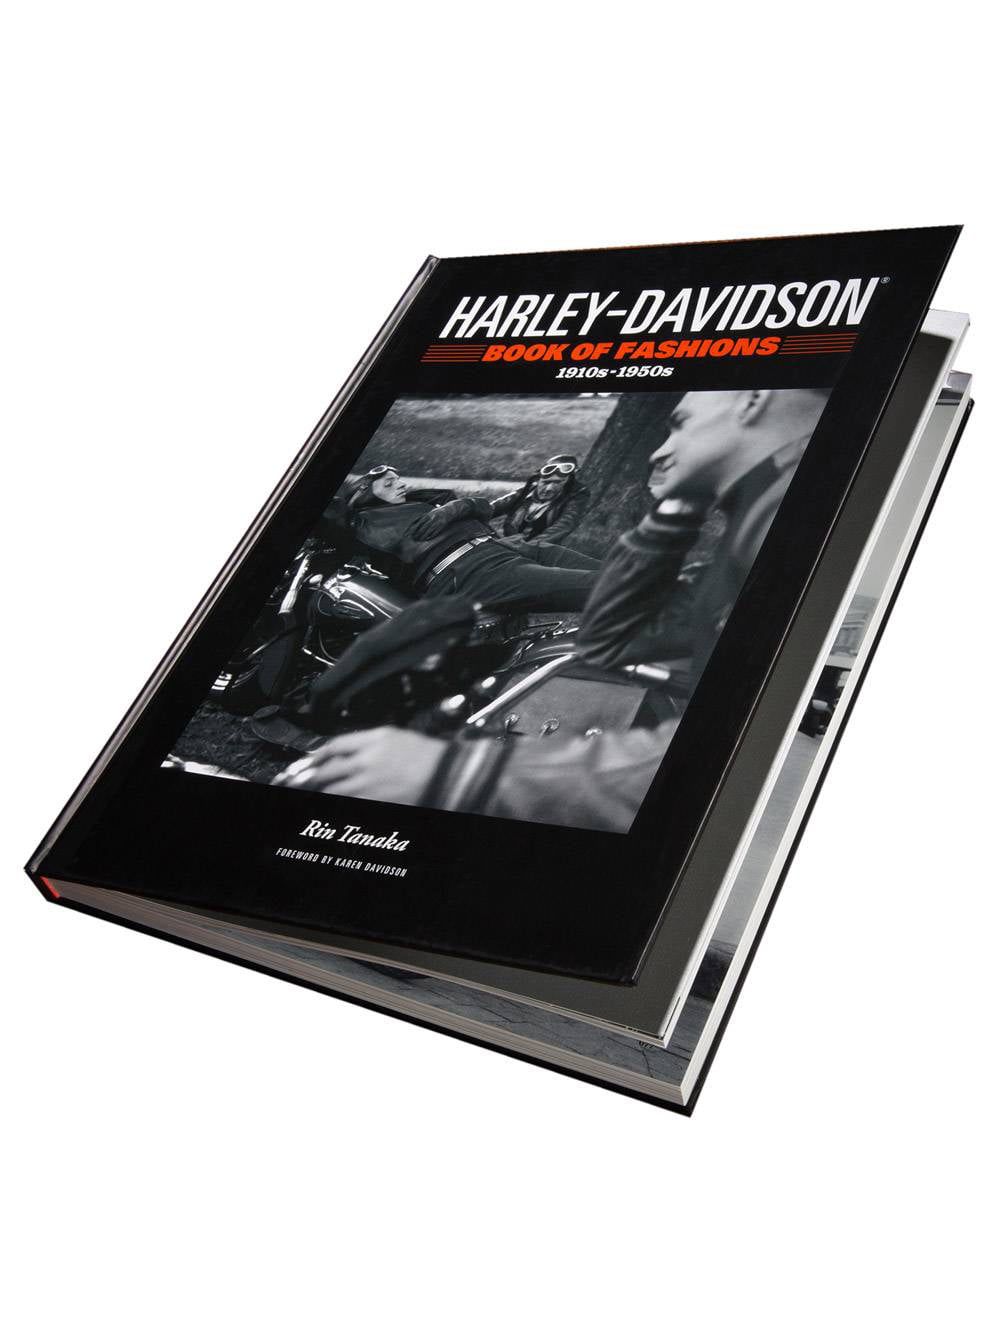 Harley-Davidson Book of Fashions, Vintage Motorcycle Apparel 1910-1950  HDBK-BOF, Harley Davidson